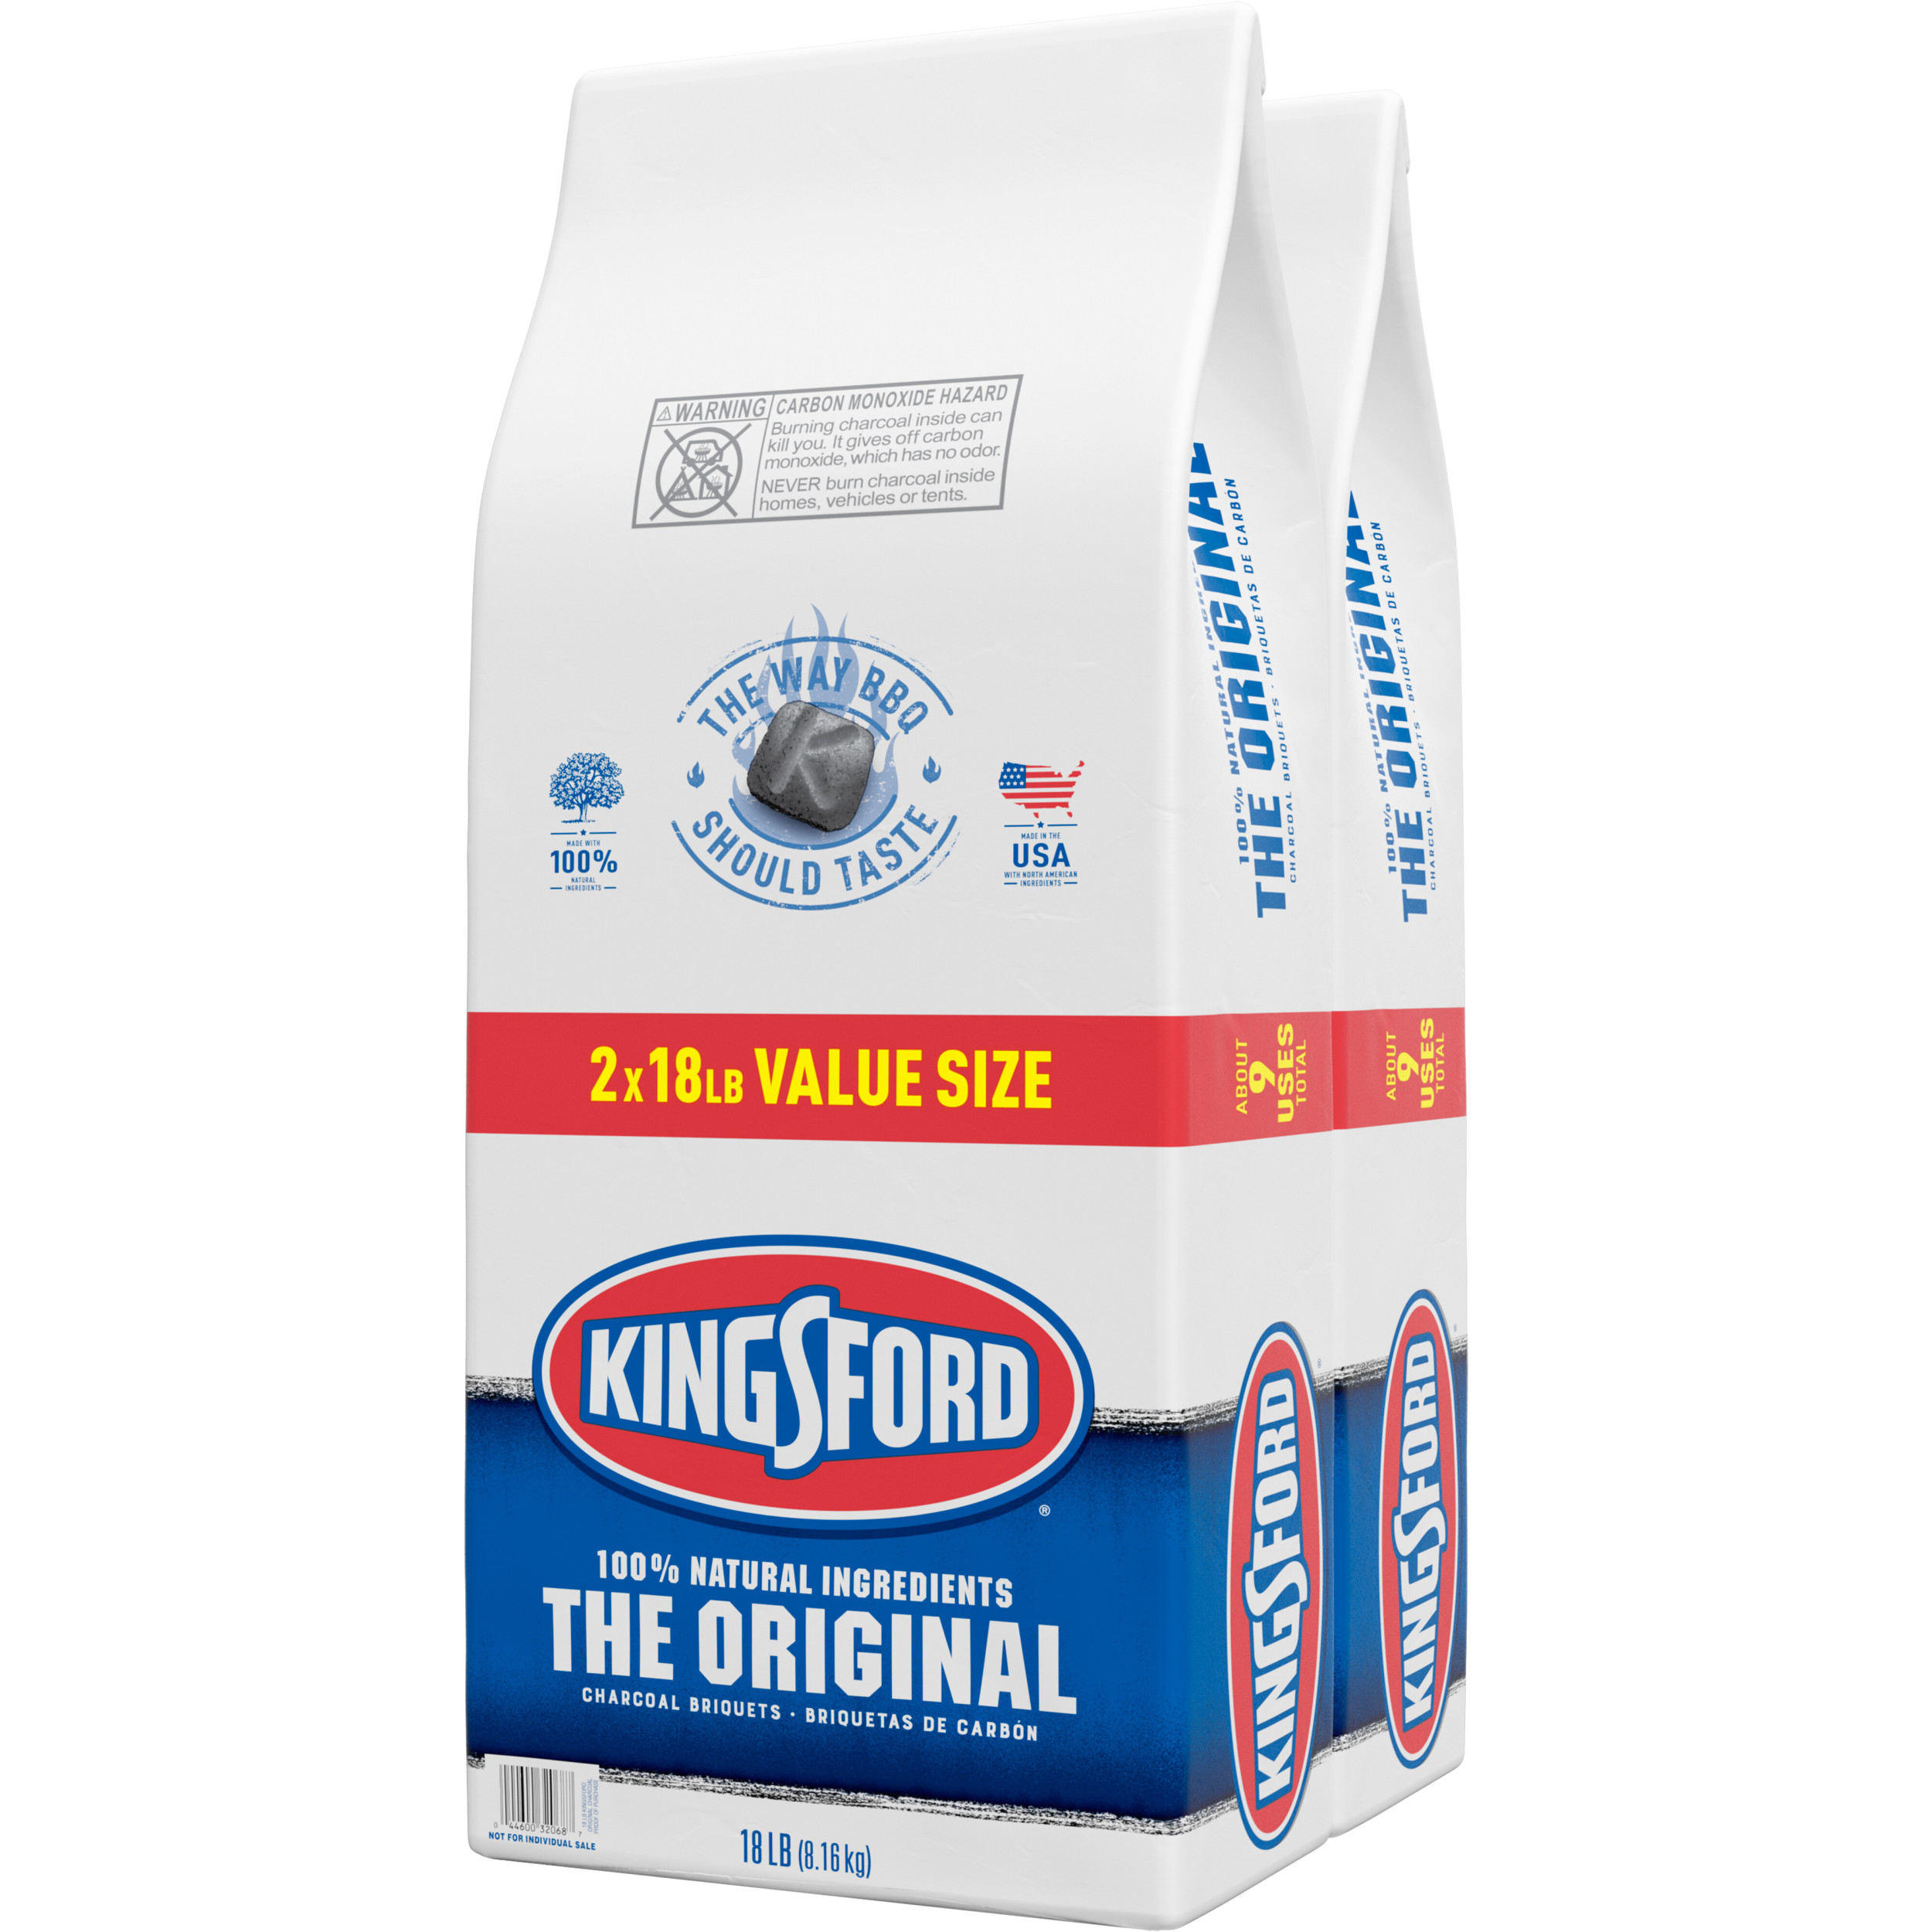 Kingsford Original Charcoal Briquettes, 18 lb (2 pack) - image 2 of 3